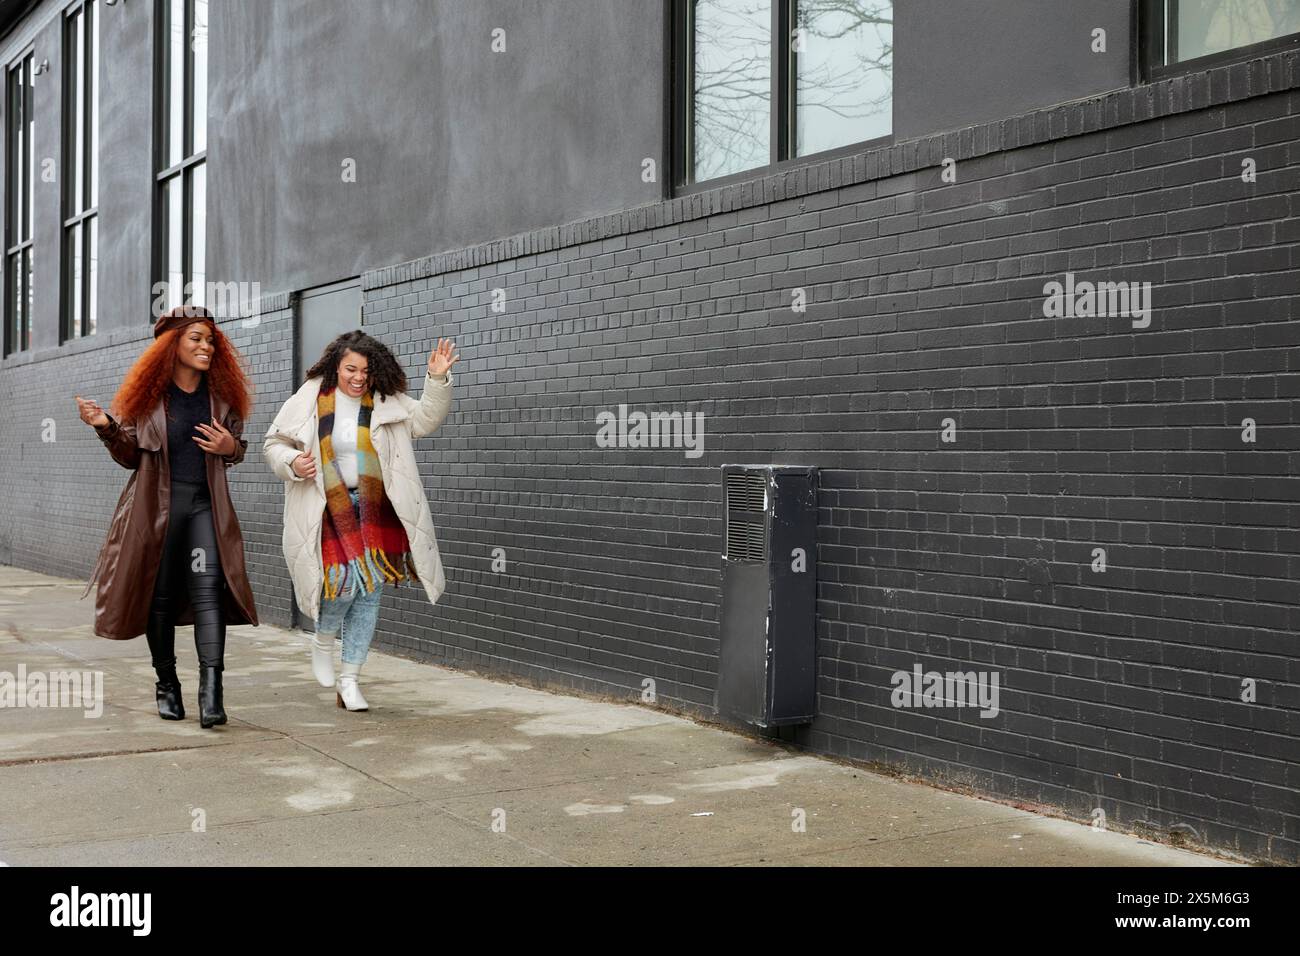 Smiling women walking alongside black building Stock Photo